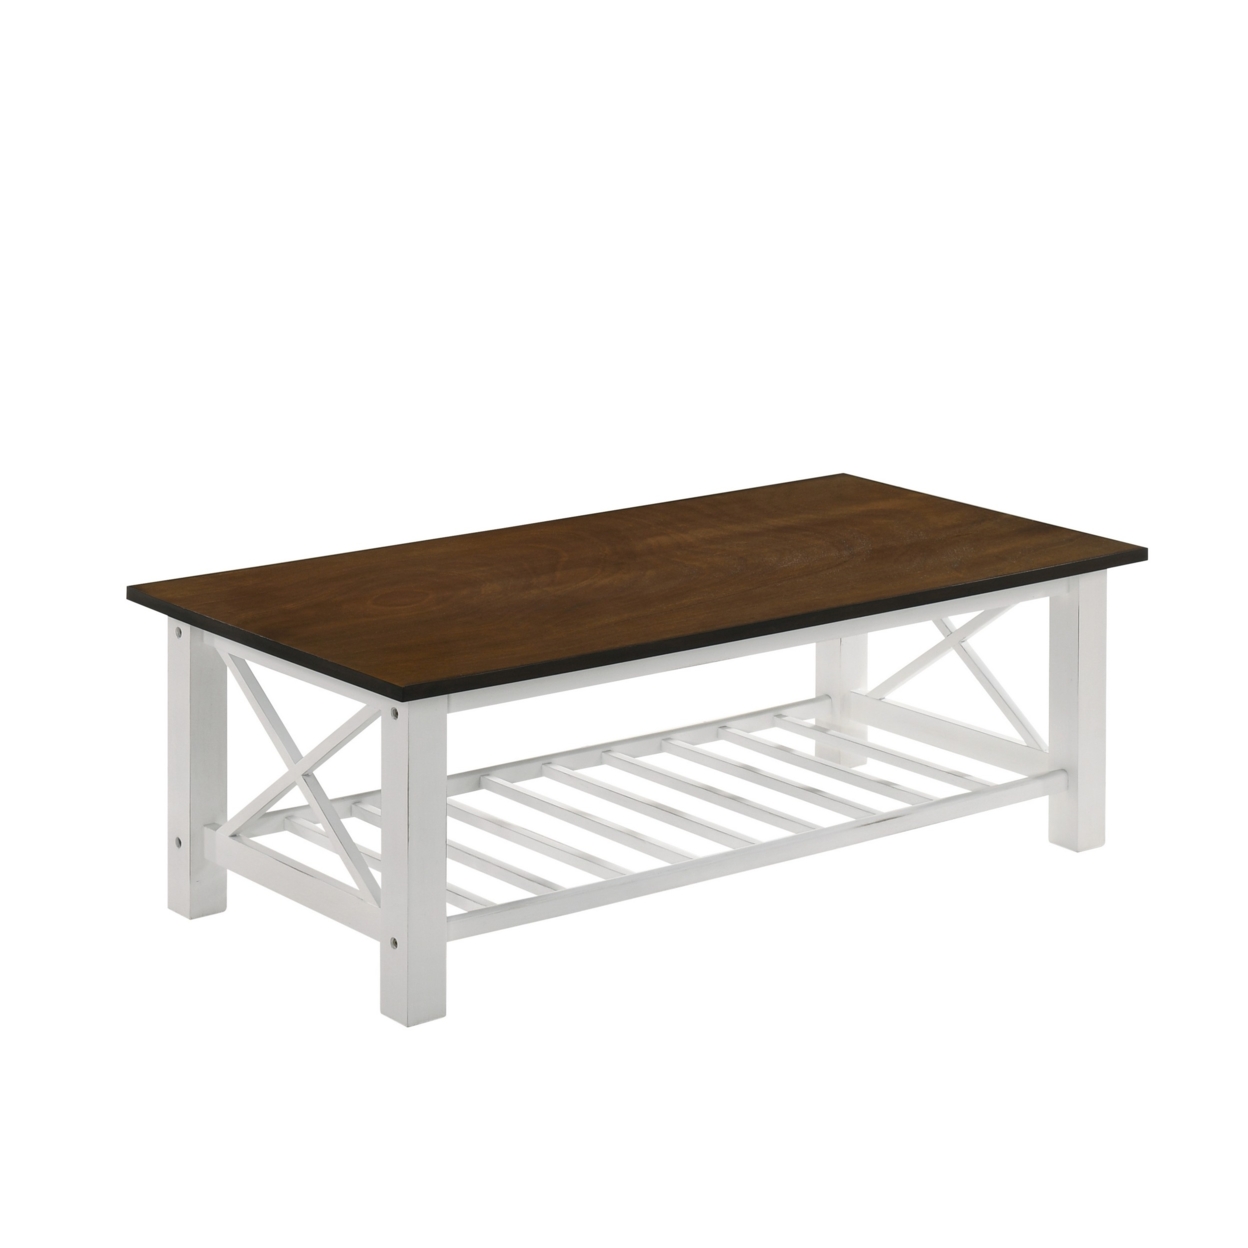 Viki 47 Inch Coffee Table, Crossbar, Slatted Open Shelf, White And Brown- Saltoro Sherpi